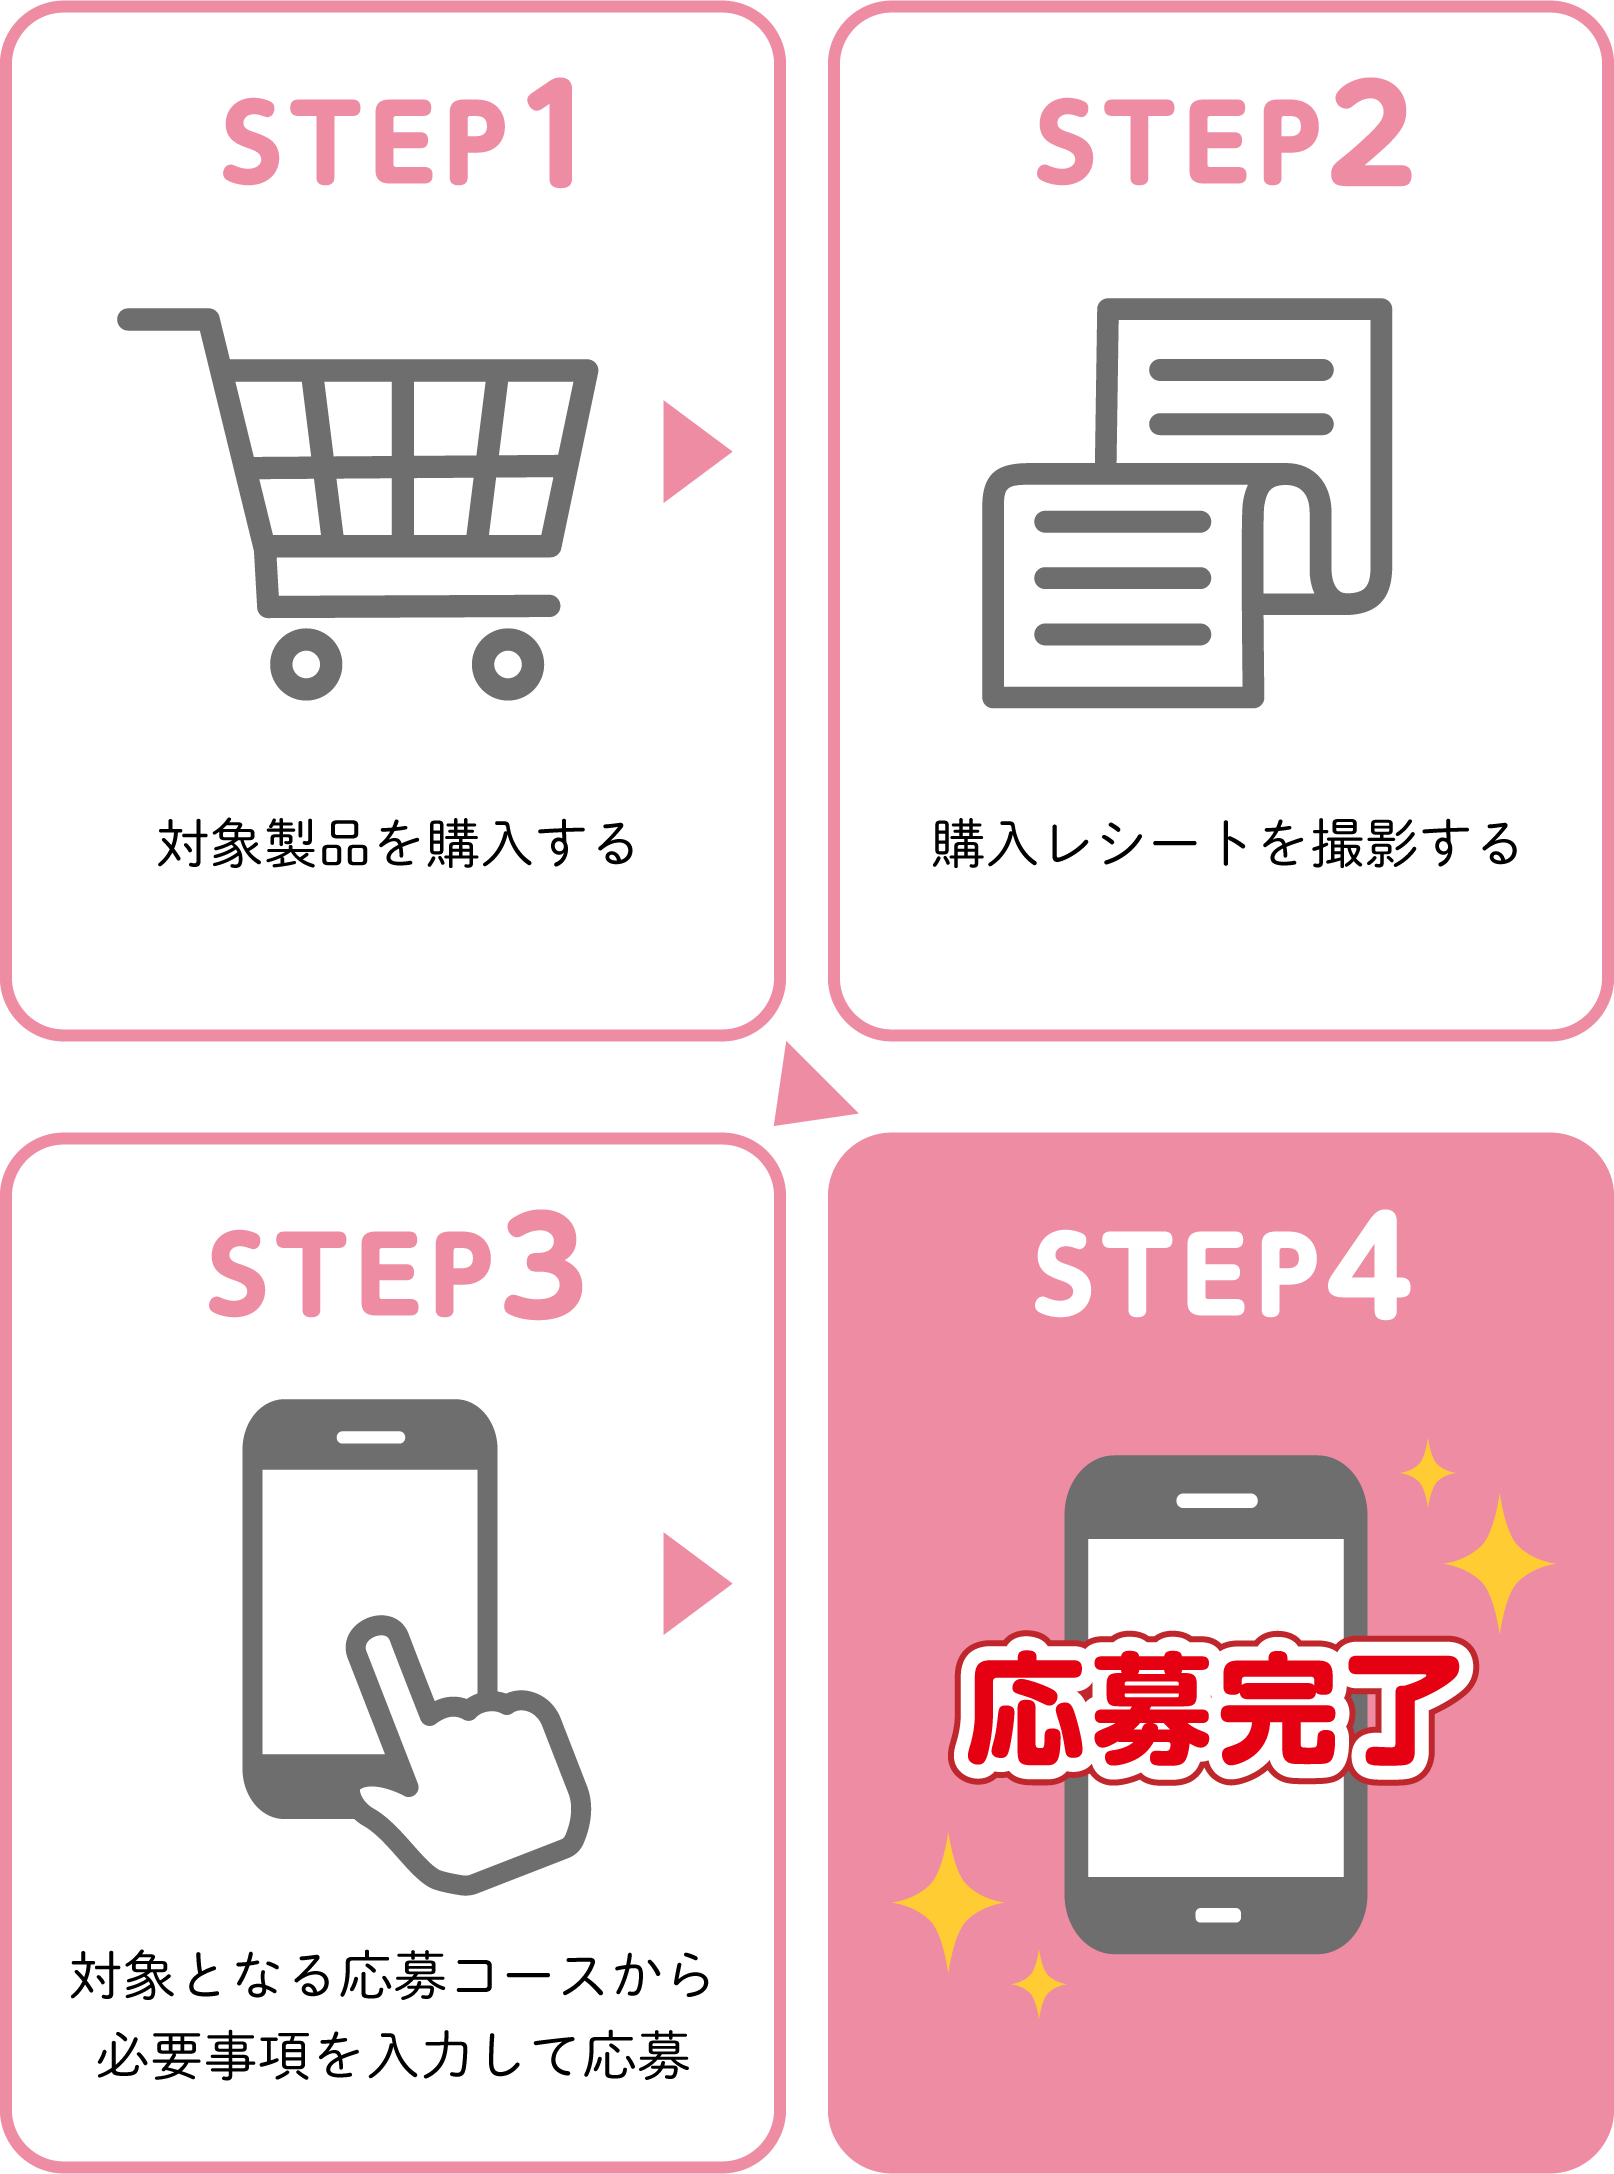 [STEP1]対象製品を購入する, [STEP2]購入レシートを撮影する, [STEP3]必要事項を入力して応募, [STEP4]応募完了